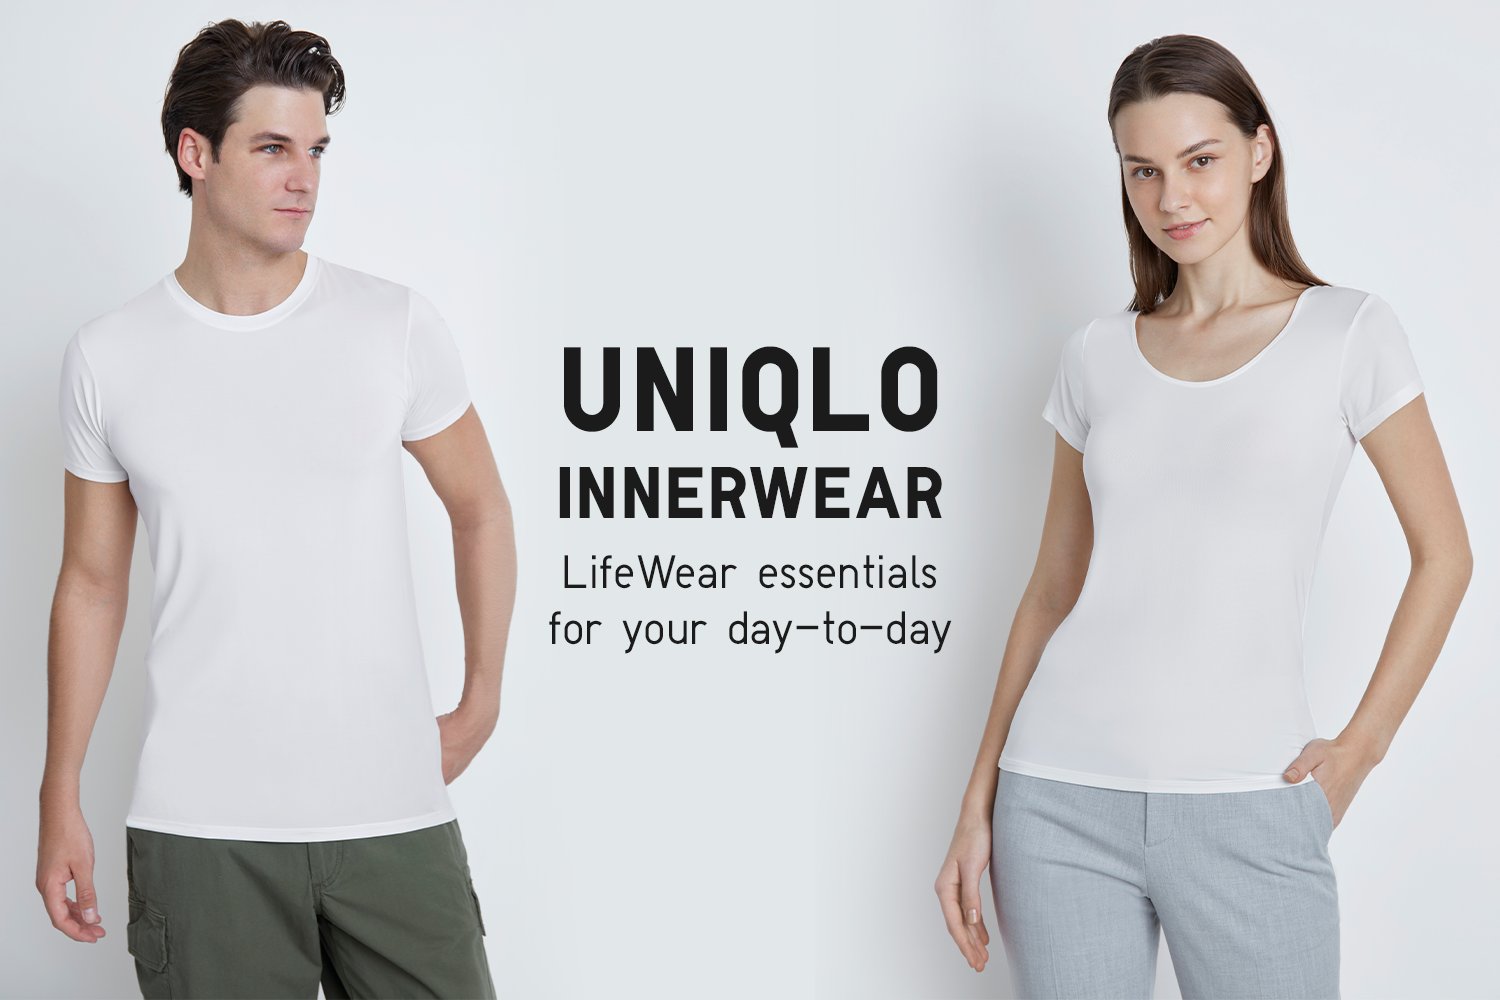 UNIQLO Philippines on X: Refresh your wardrobe essentials with